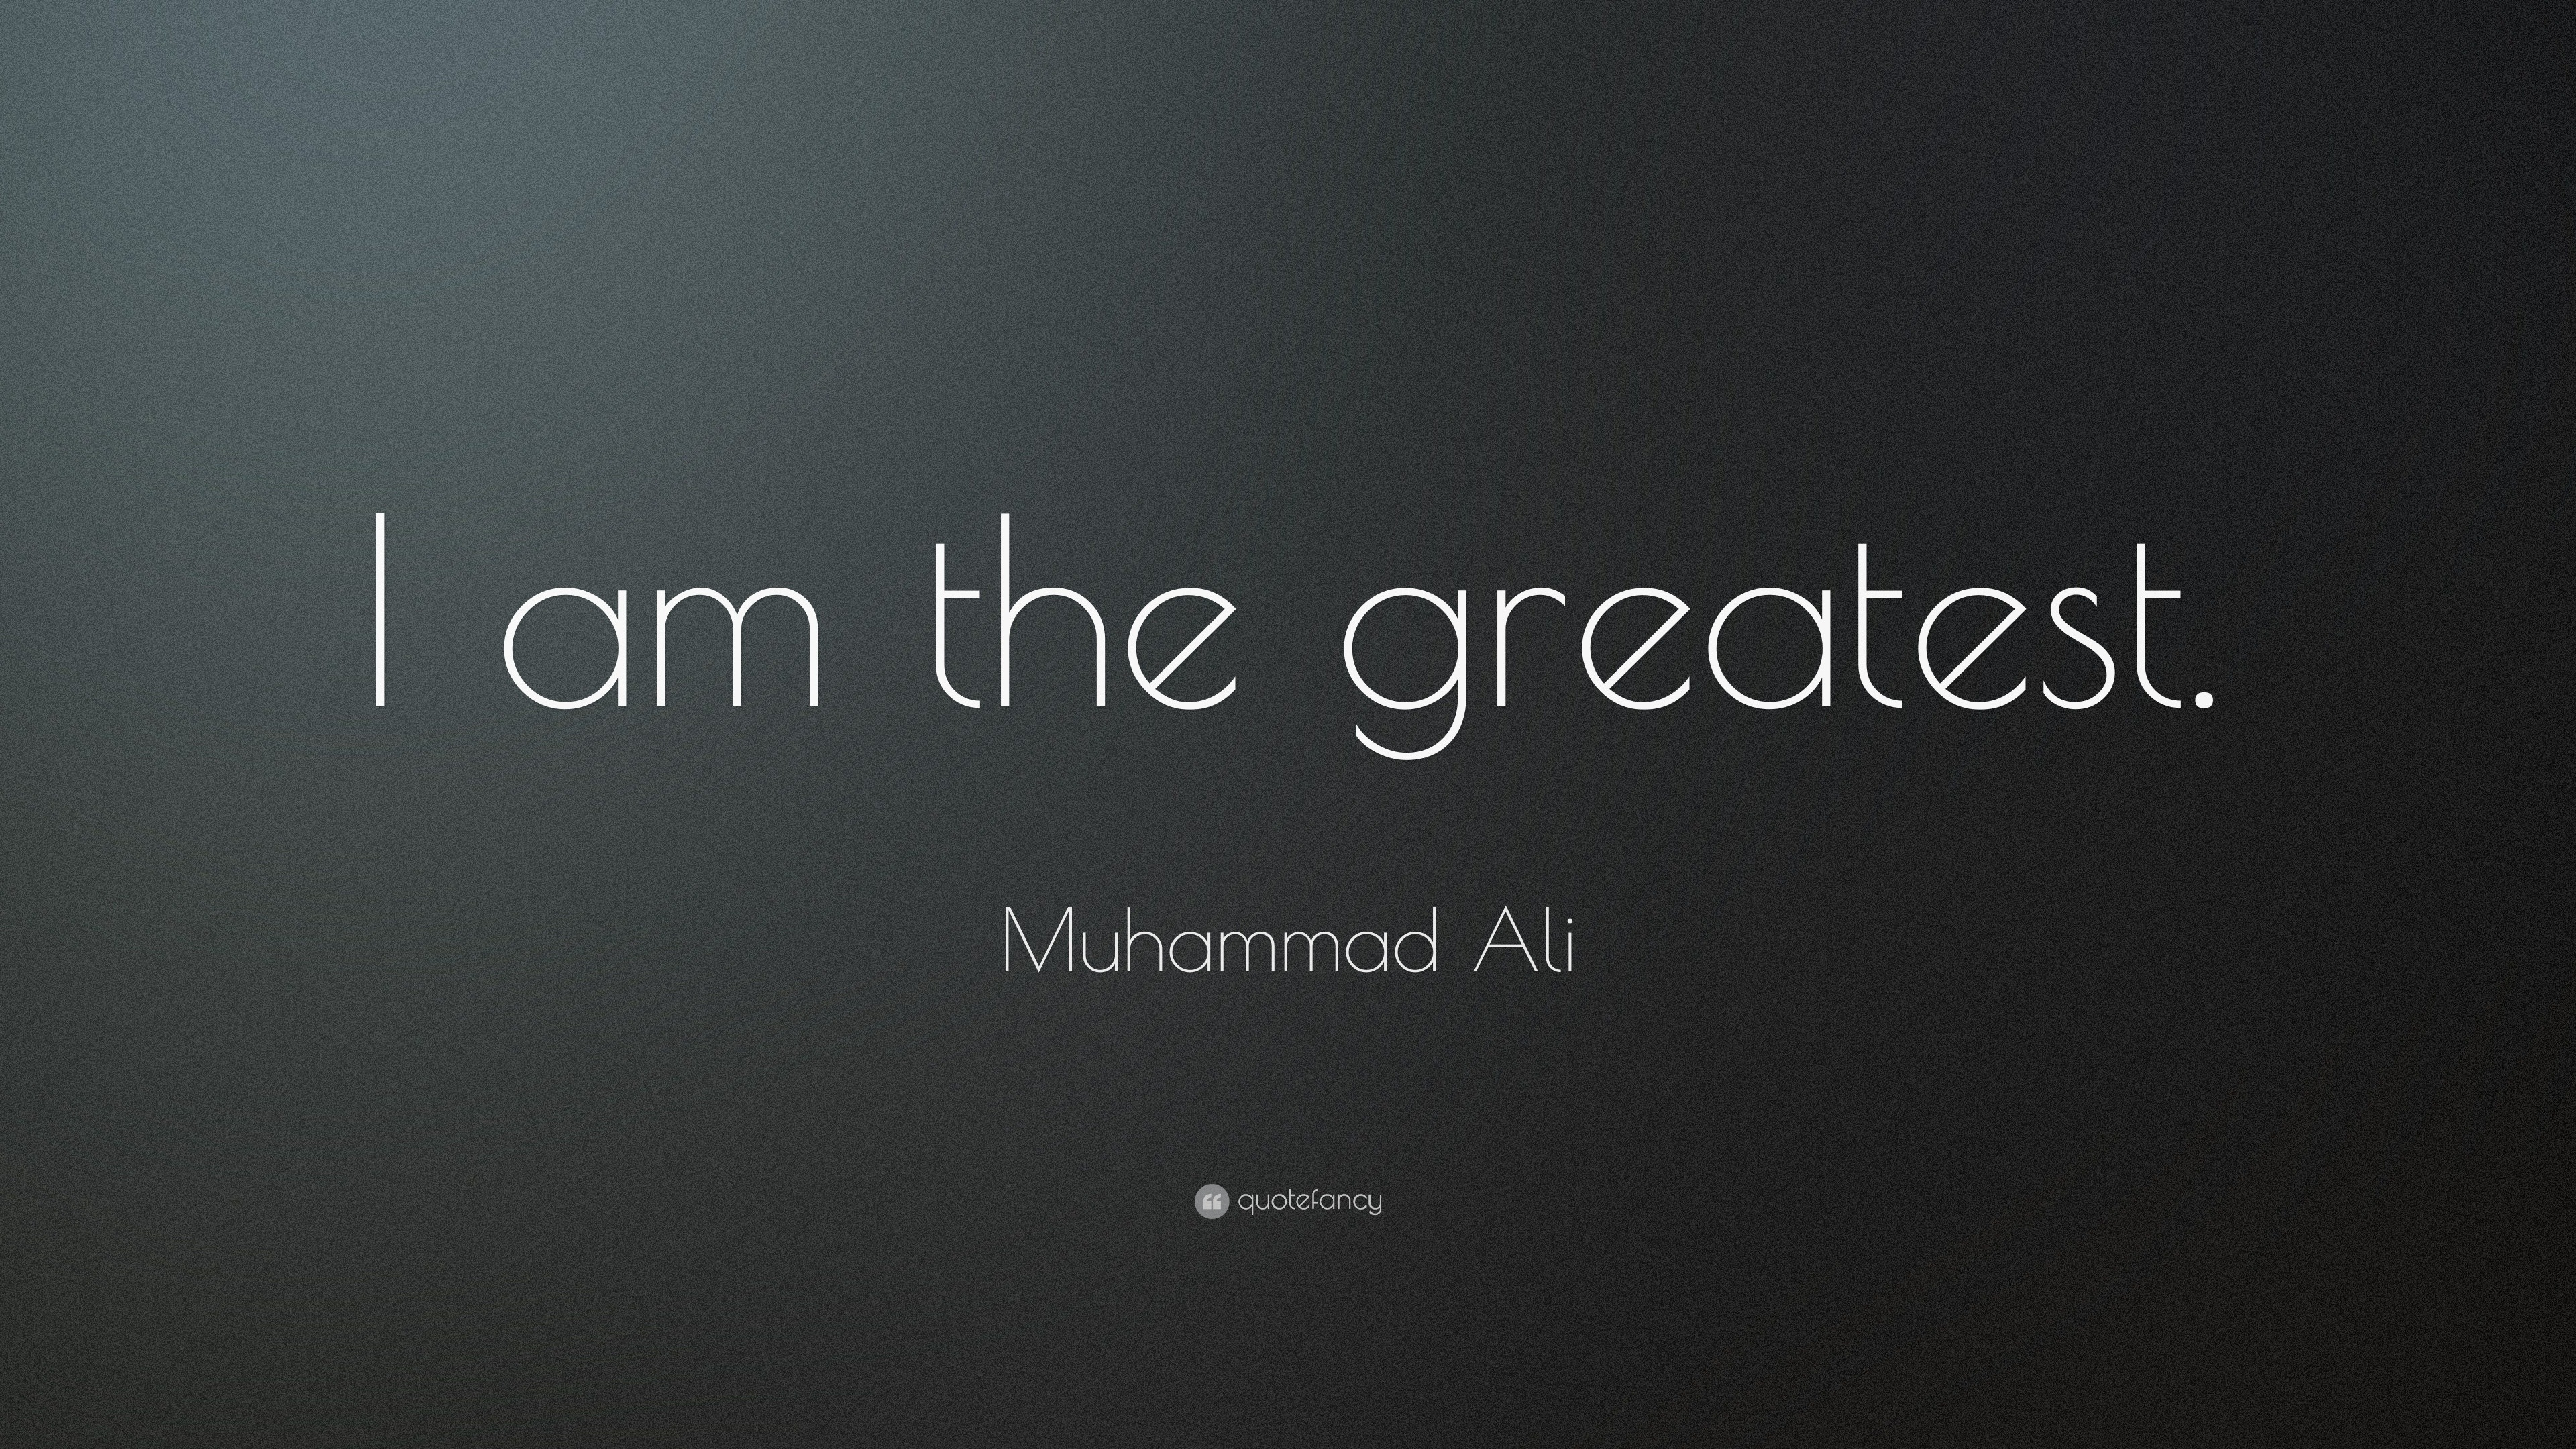 Muhammad Ali Quote: “I am the greatest.”